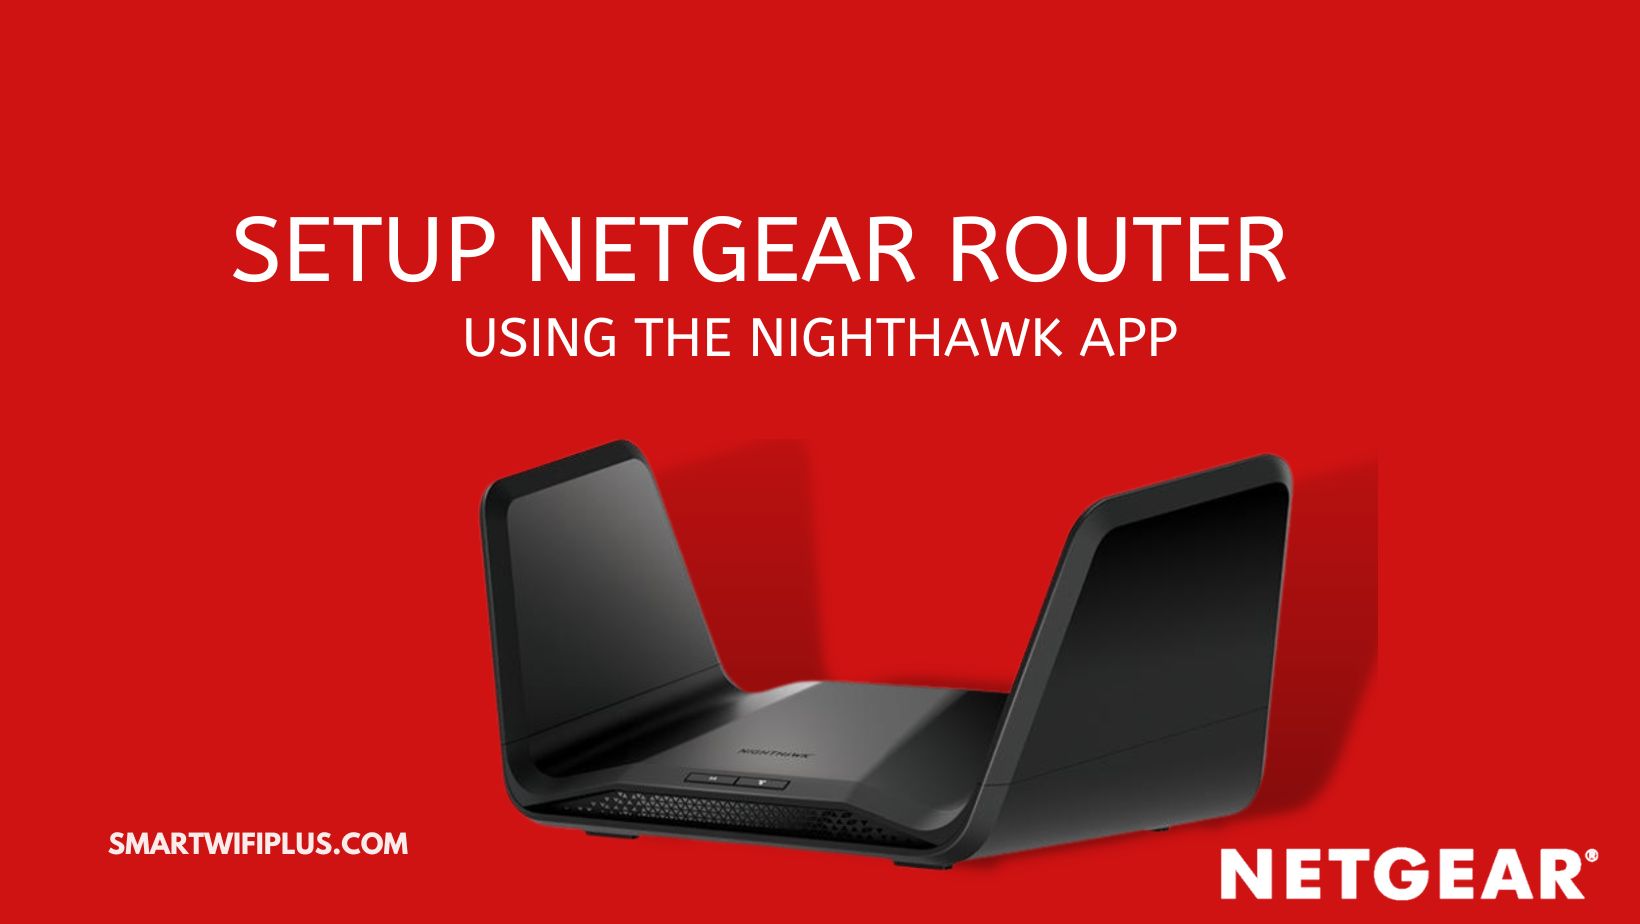 How to Setup Netgear Router using the Nighthawk App?